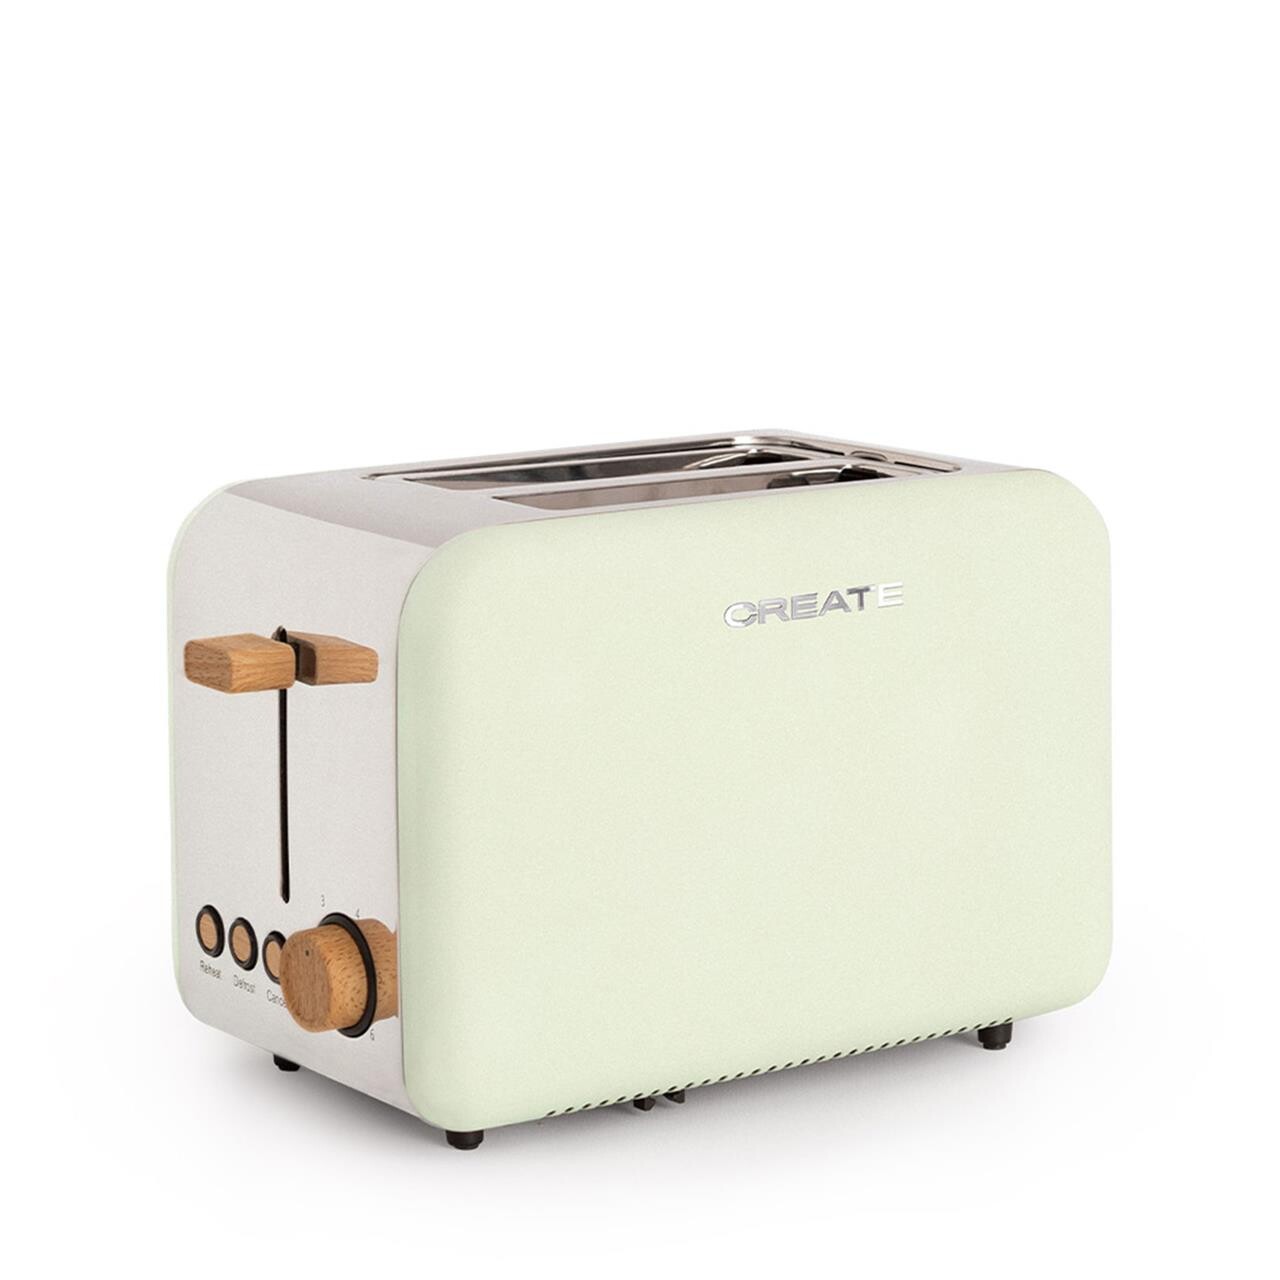 CREATE Toaster mint